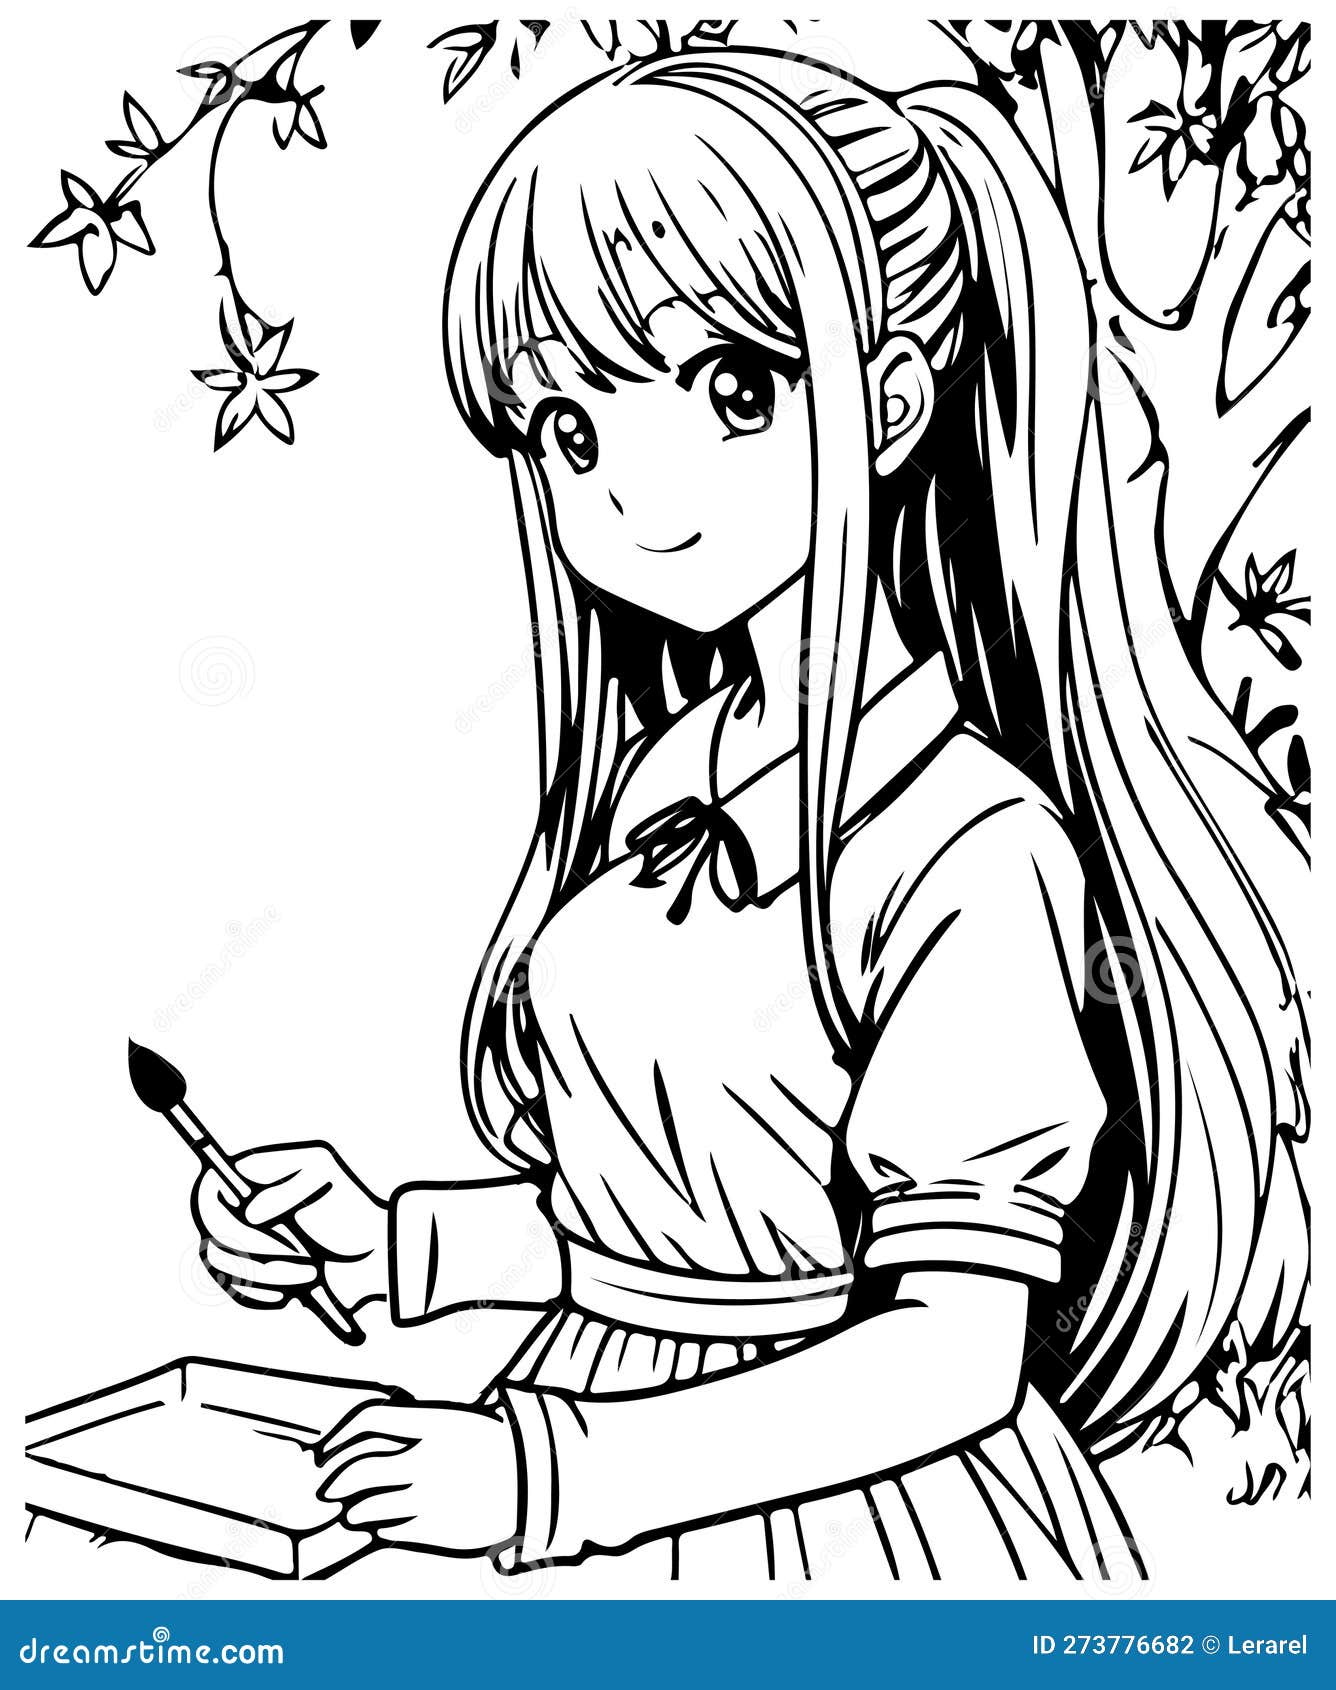 how to draw a cute anime girl | anime drawing - MyHobbyClass.com-saigonsouth.com.vn